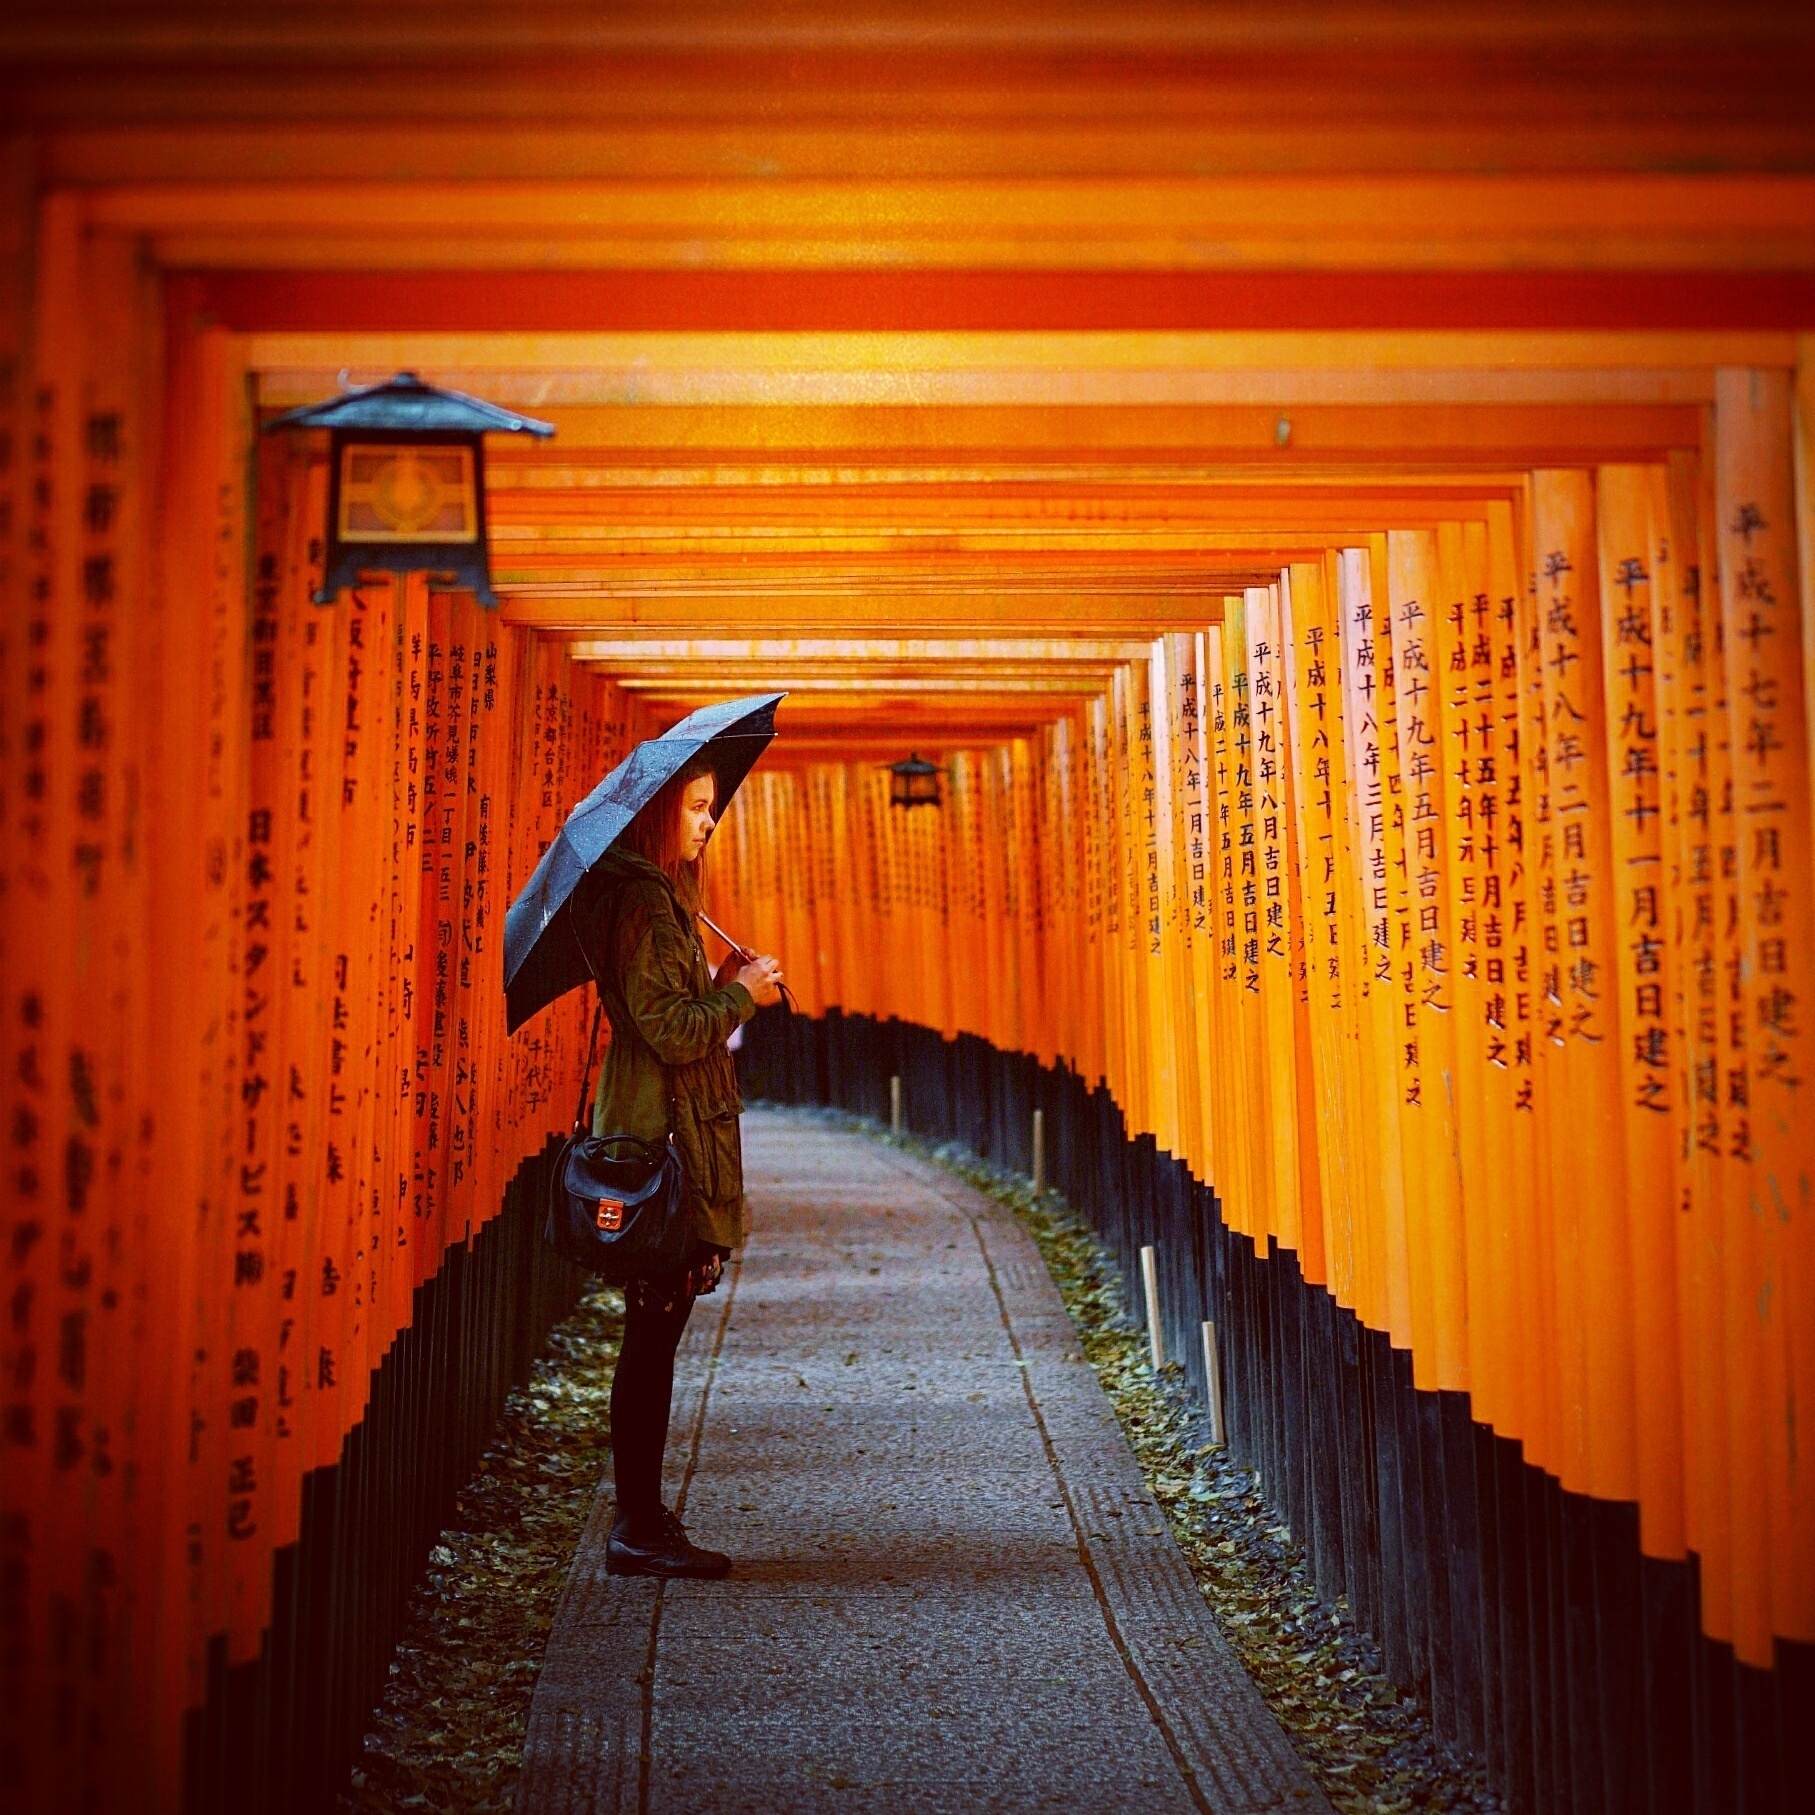 The iconic Fushimi Inari Shrine in Japan's cultural capital.